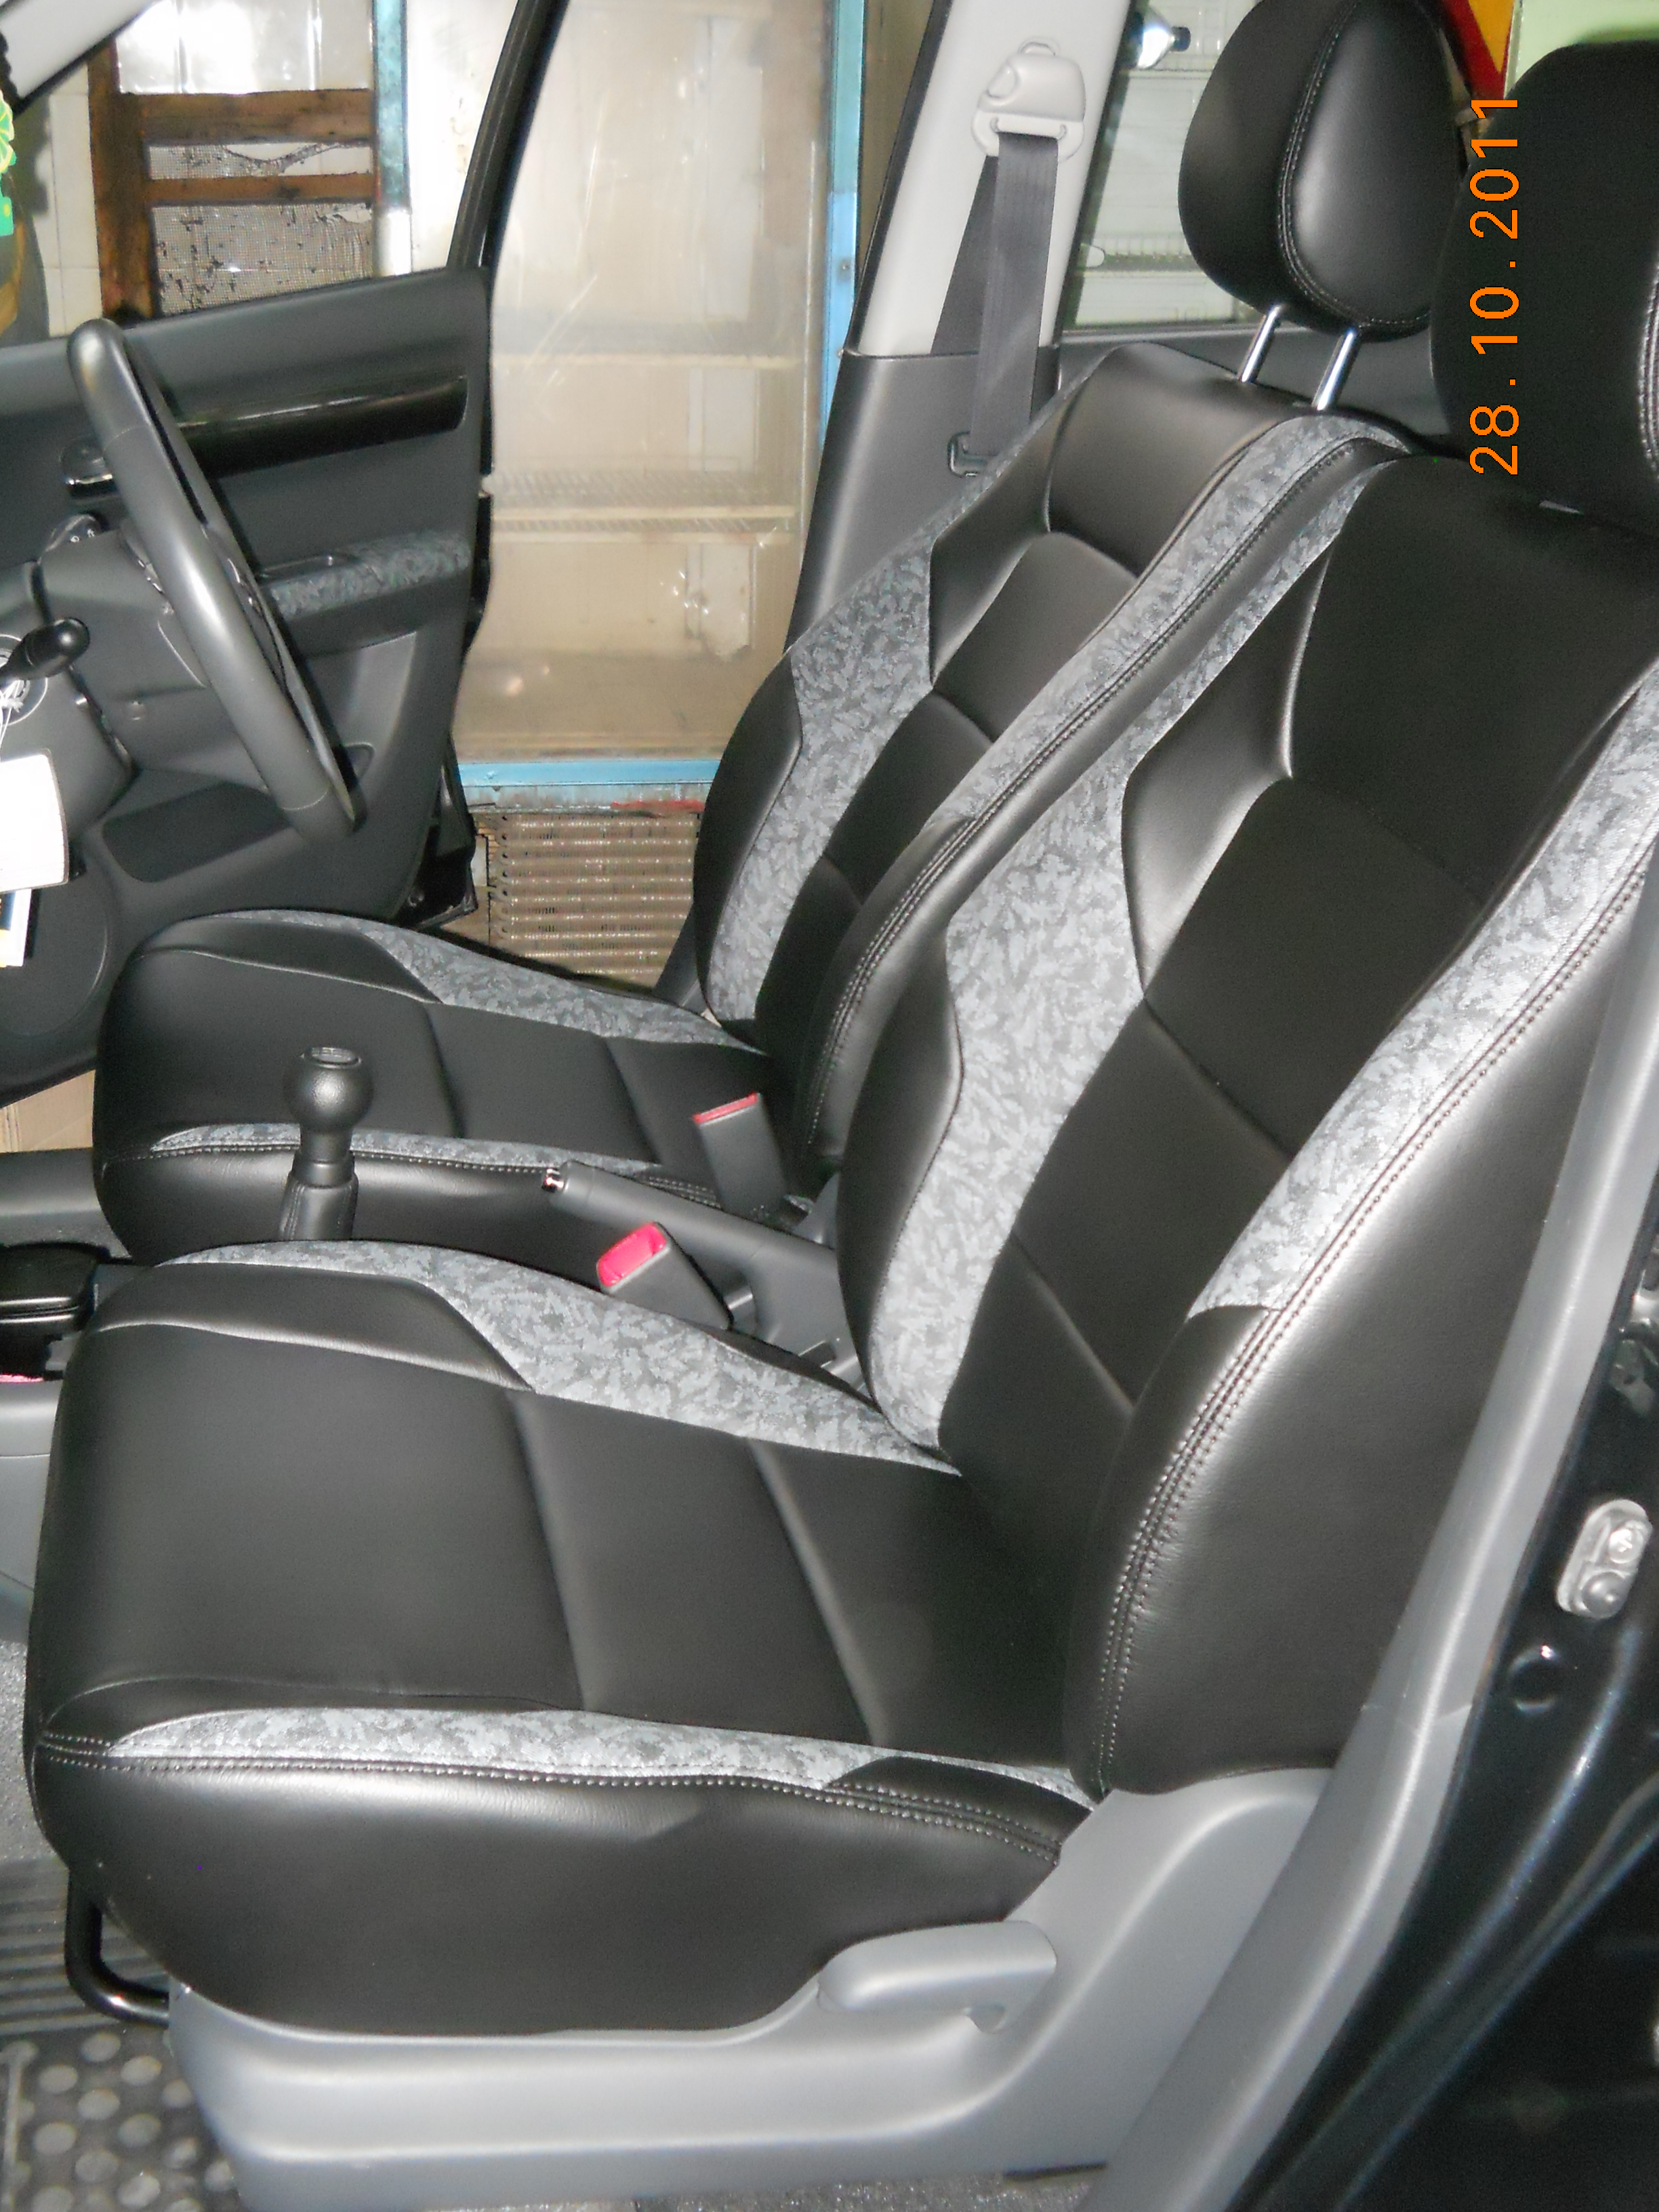 Foto Interior Mobil  Swift  Modifikasi  Mobil 